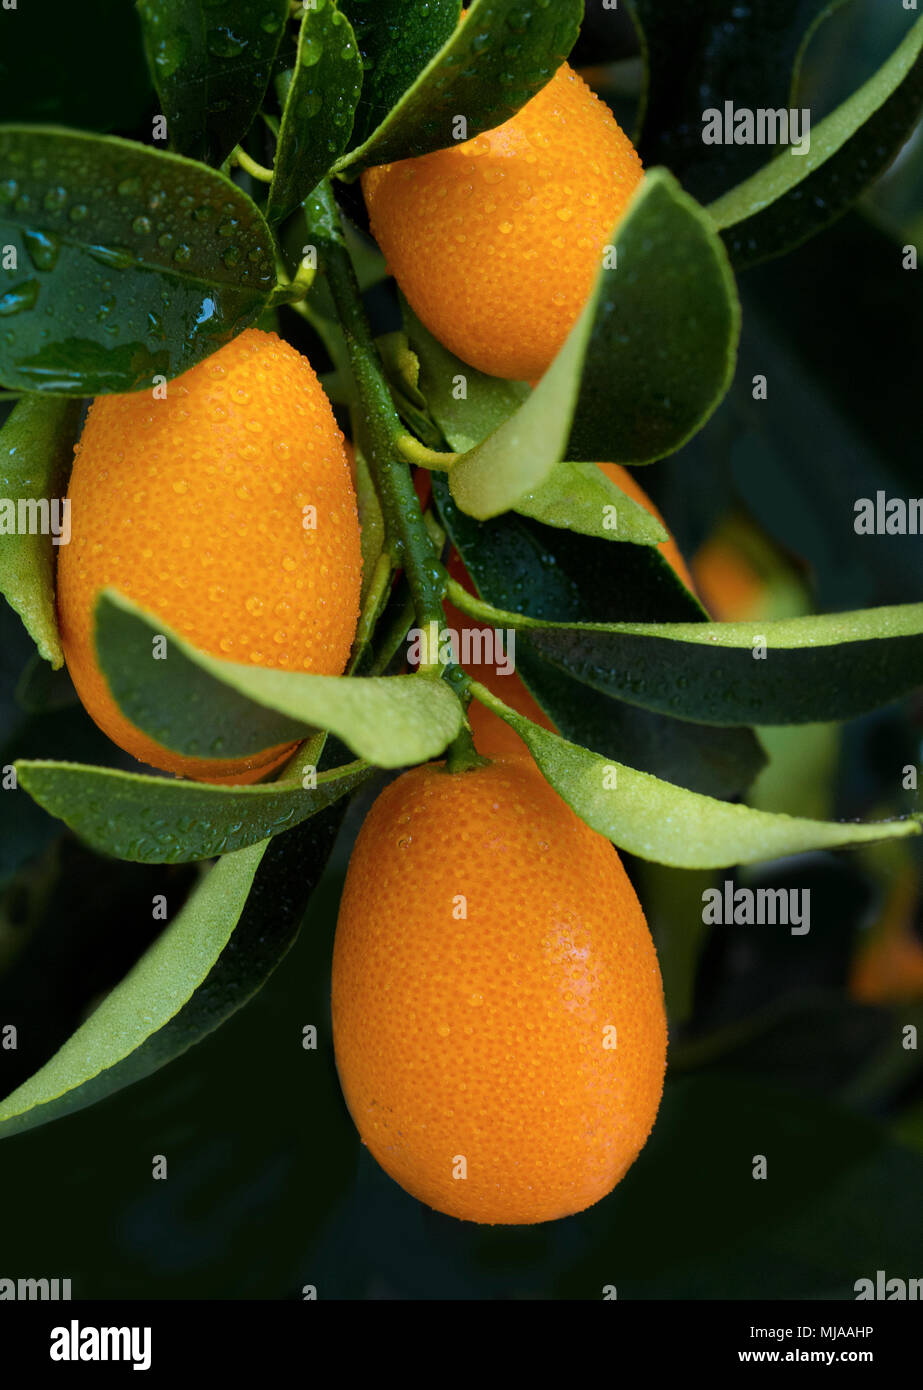 Kumquat fruits in the foliage Stock Photo